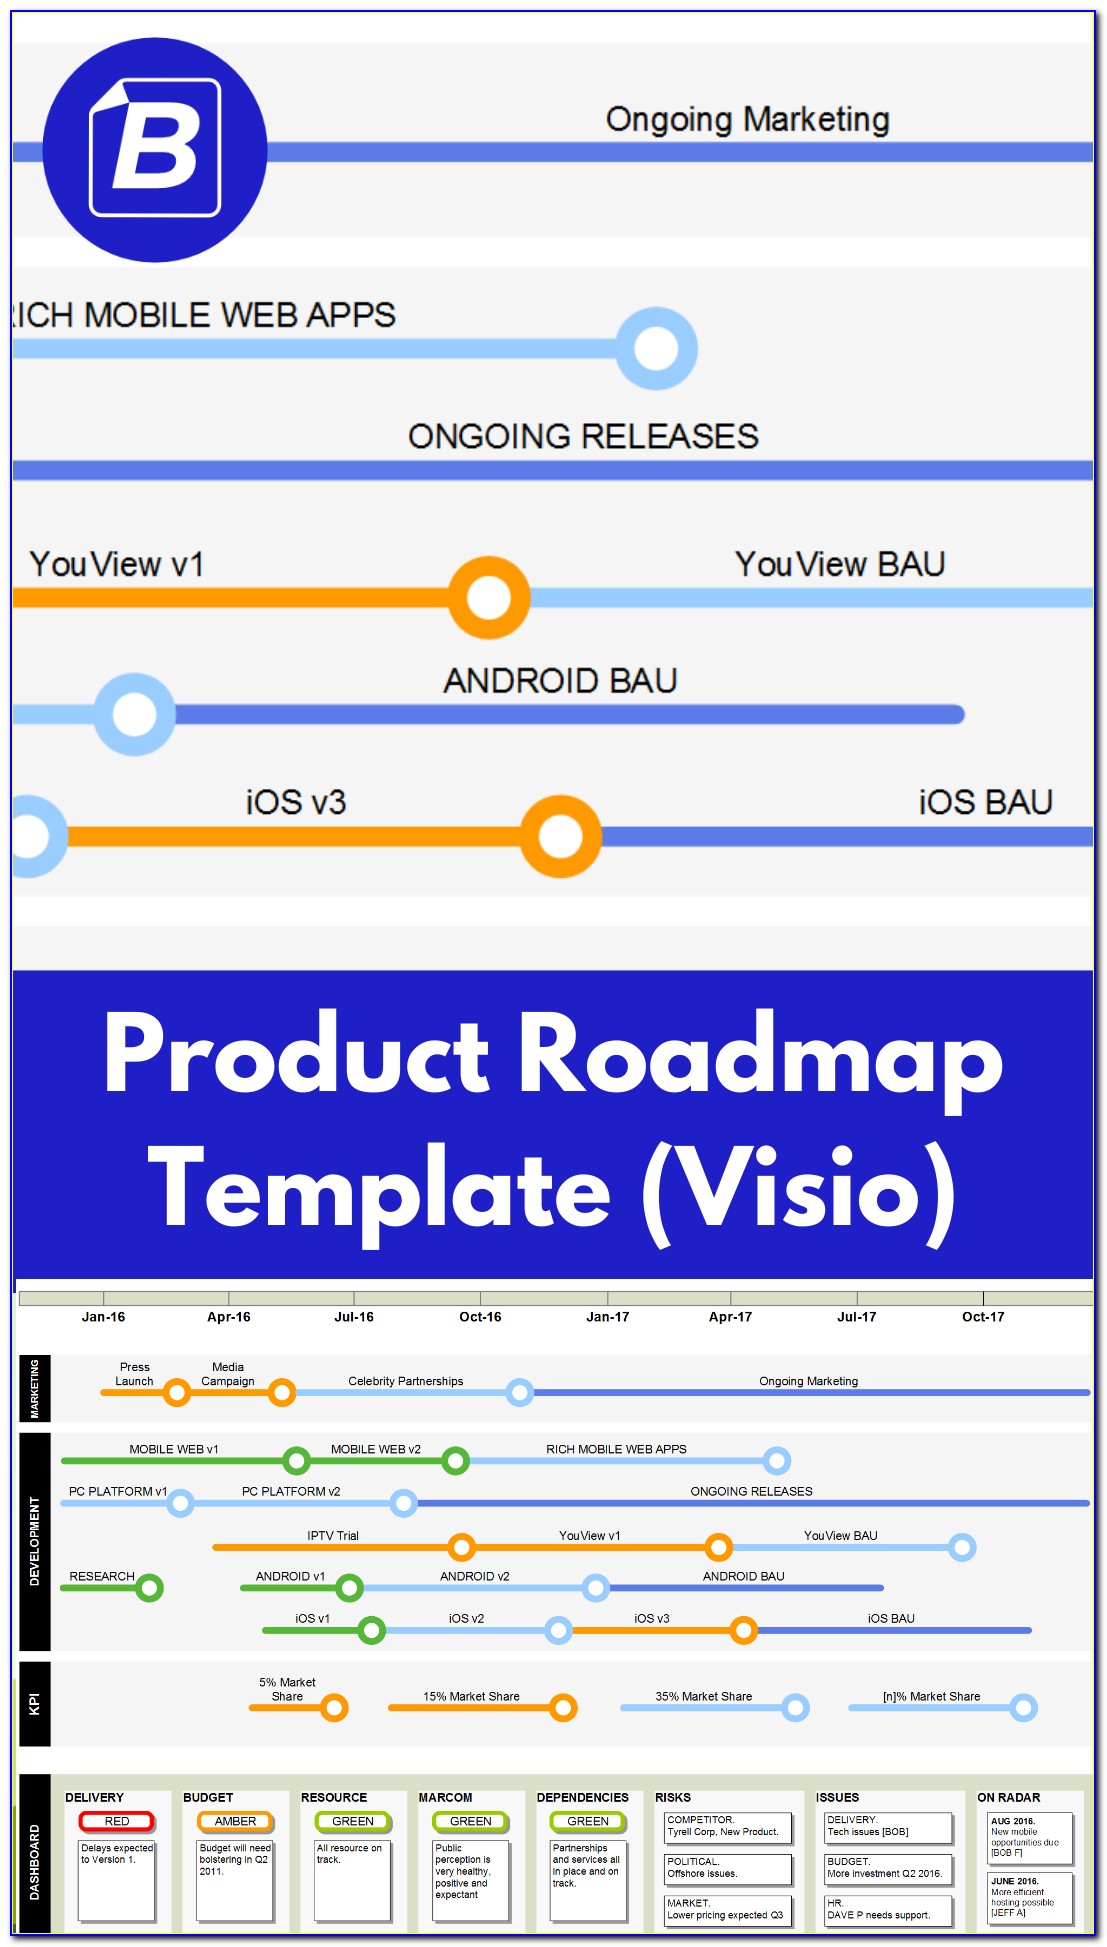 Application Roadmap Template Visio